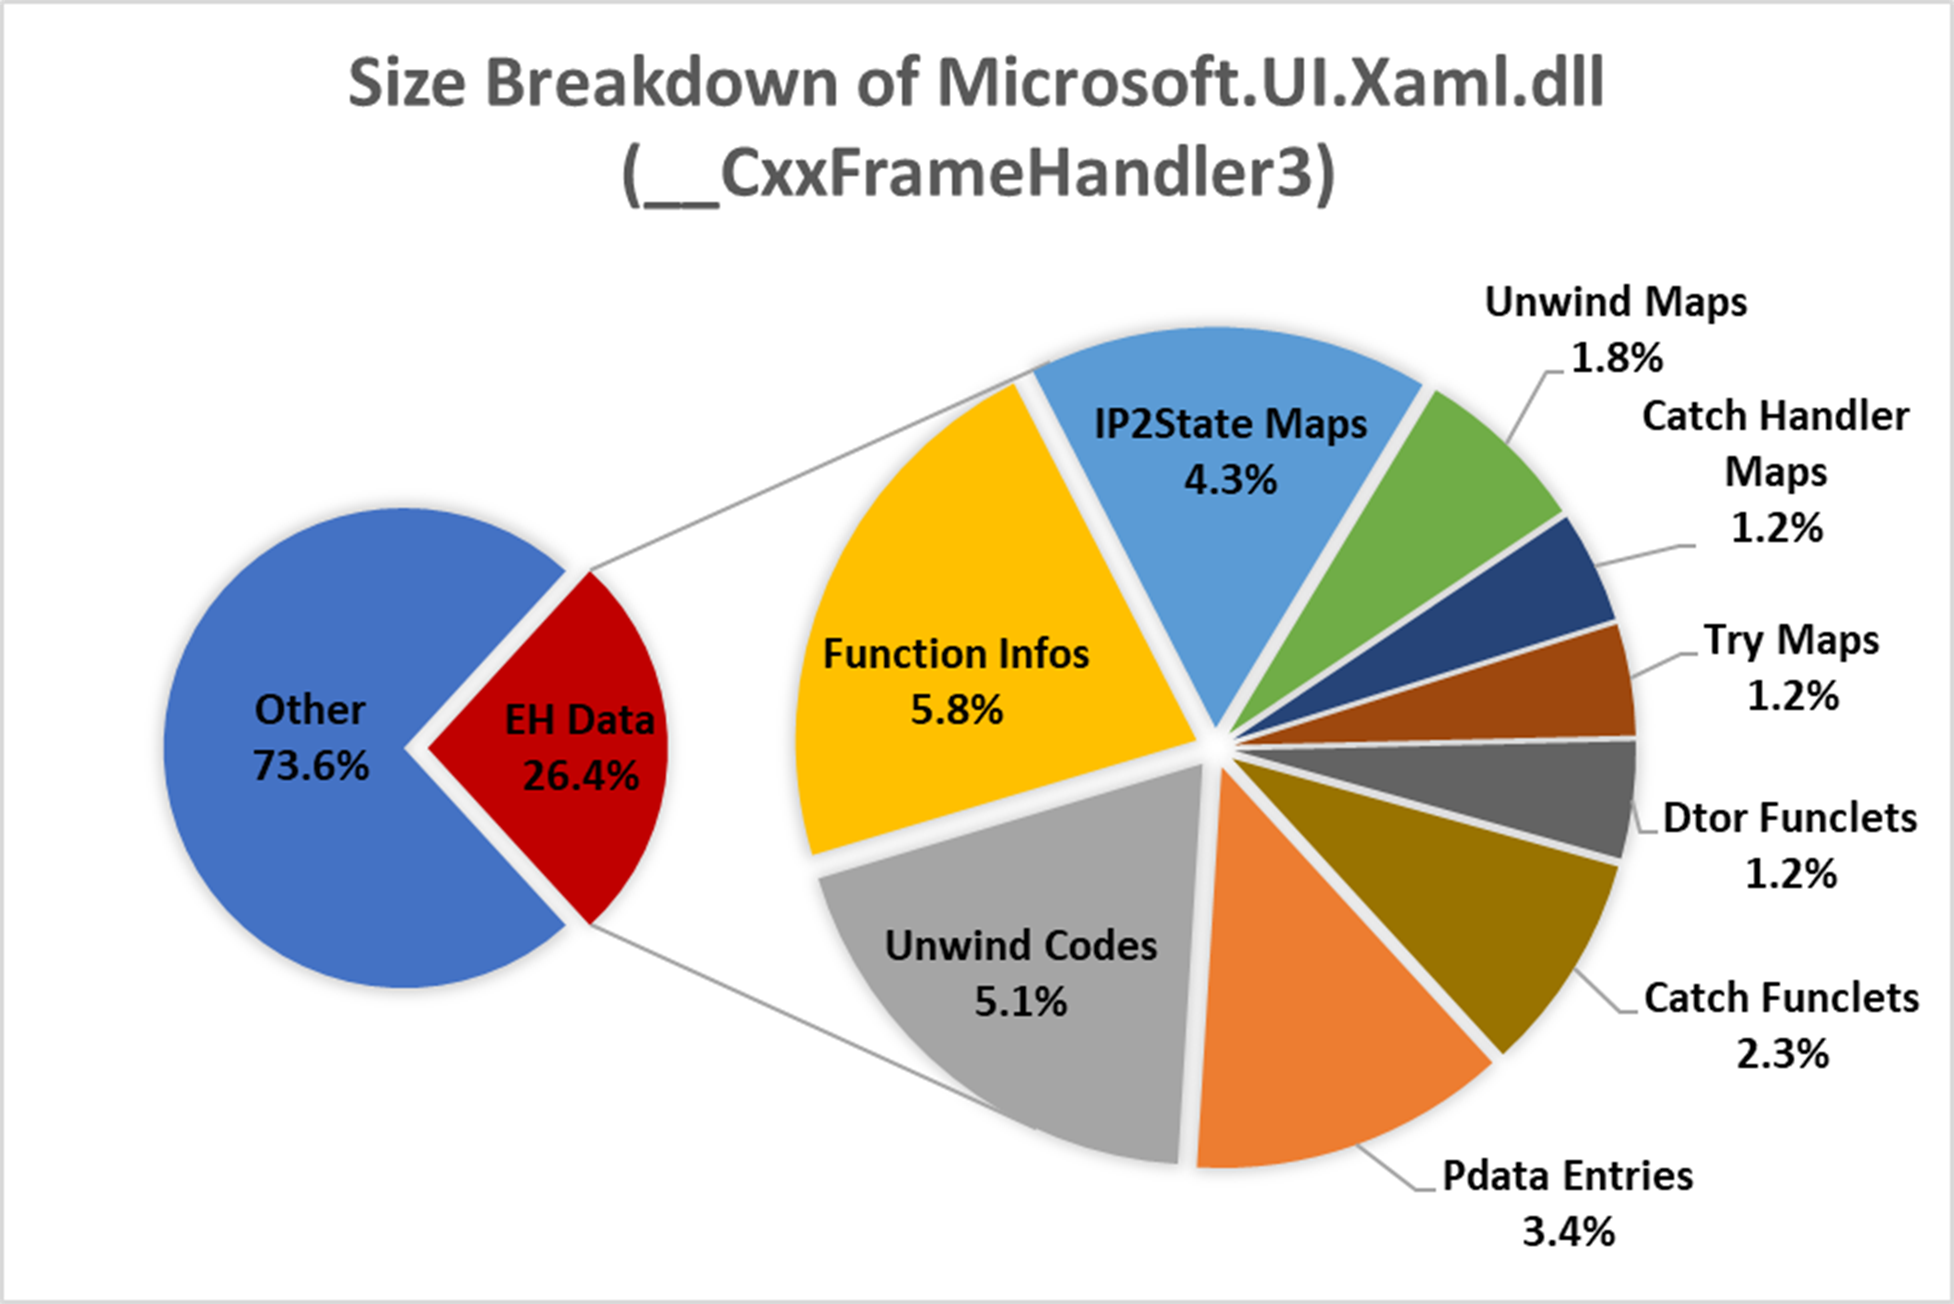 Size Breakdown of Microsoft.UI.Xaml.dll using __CxxFrameHandler3